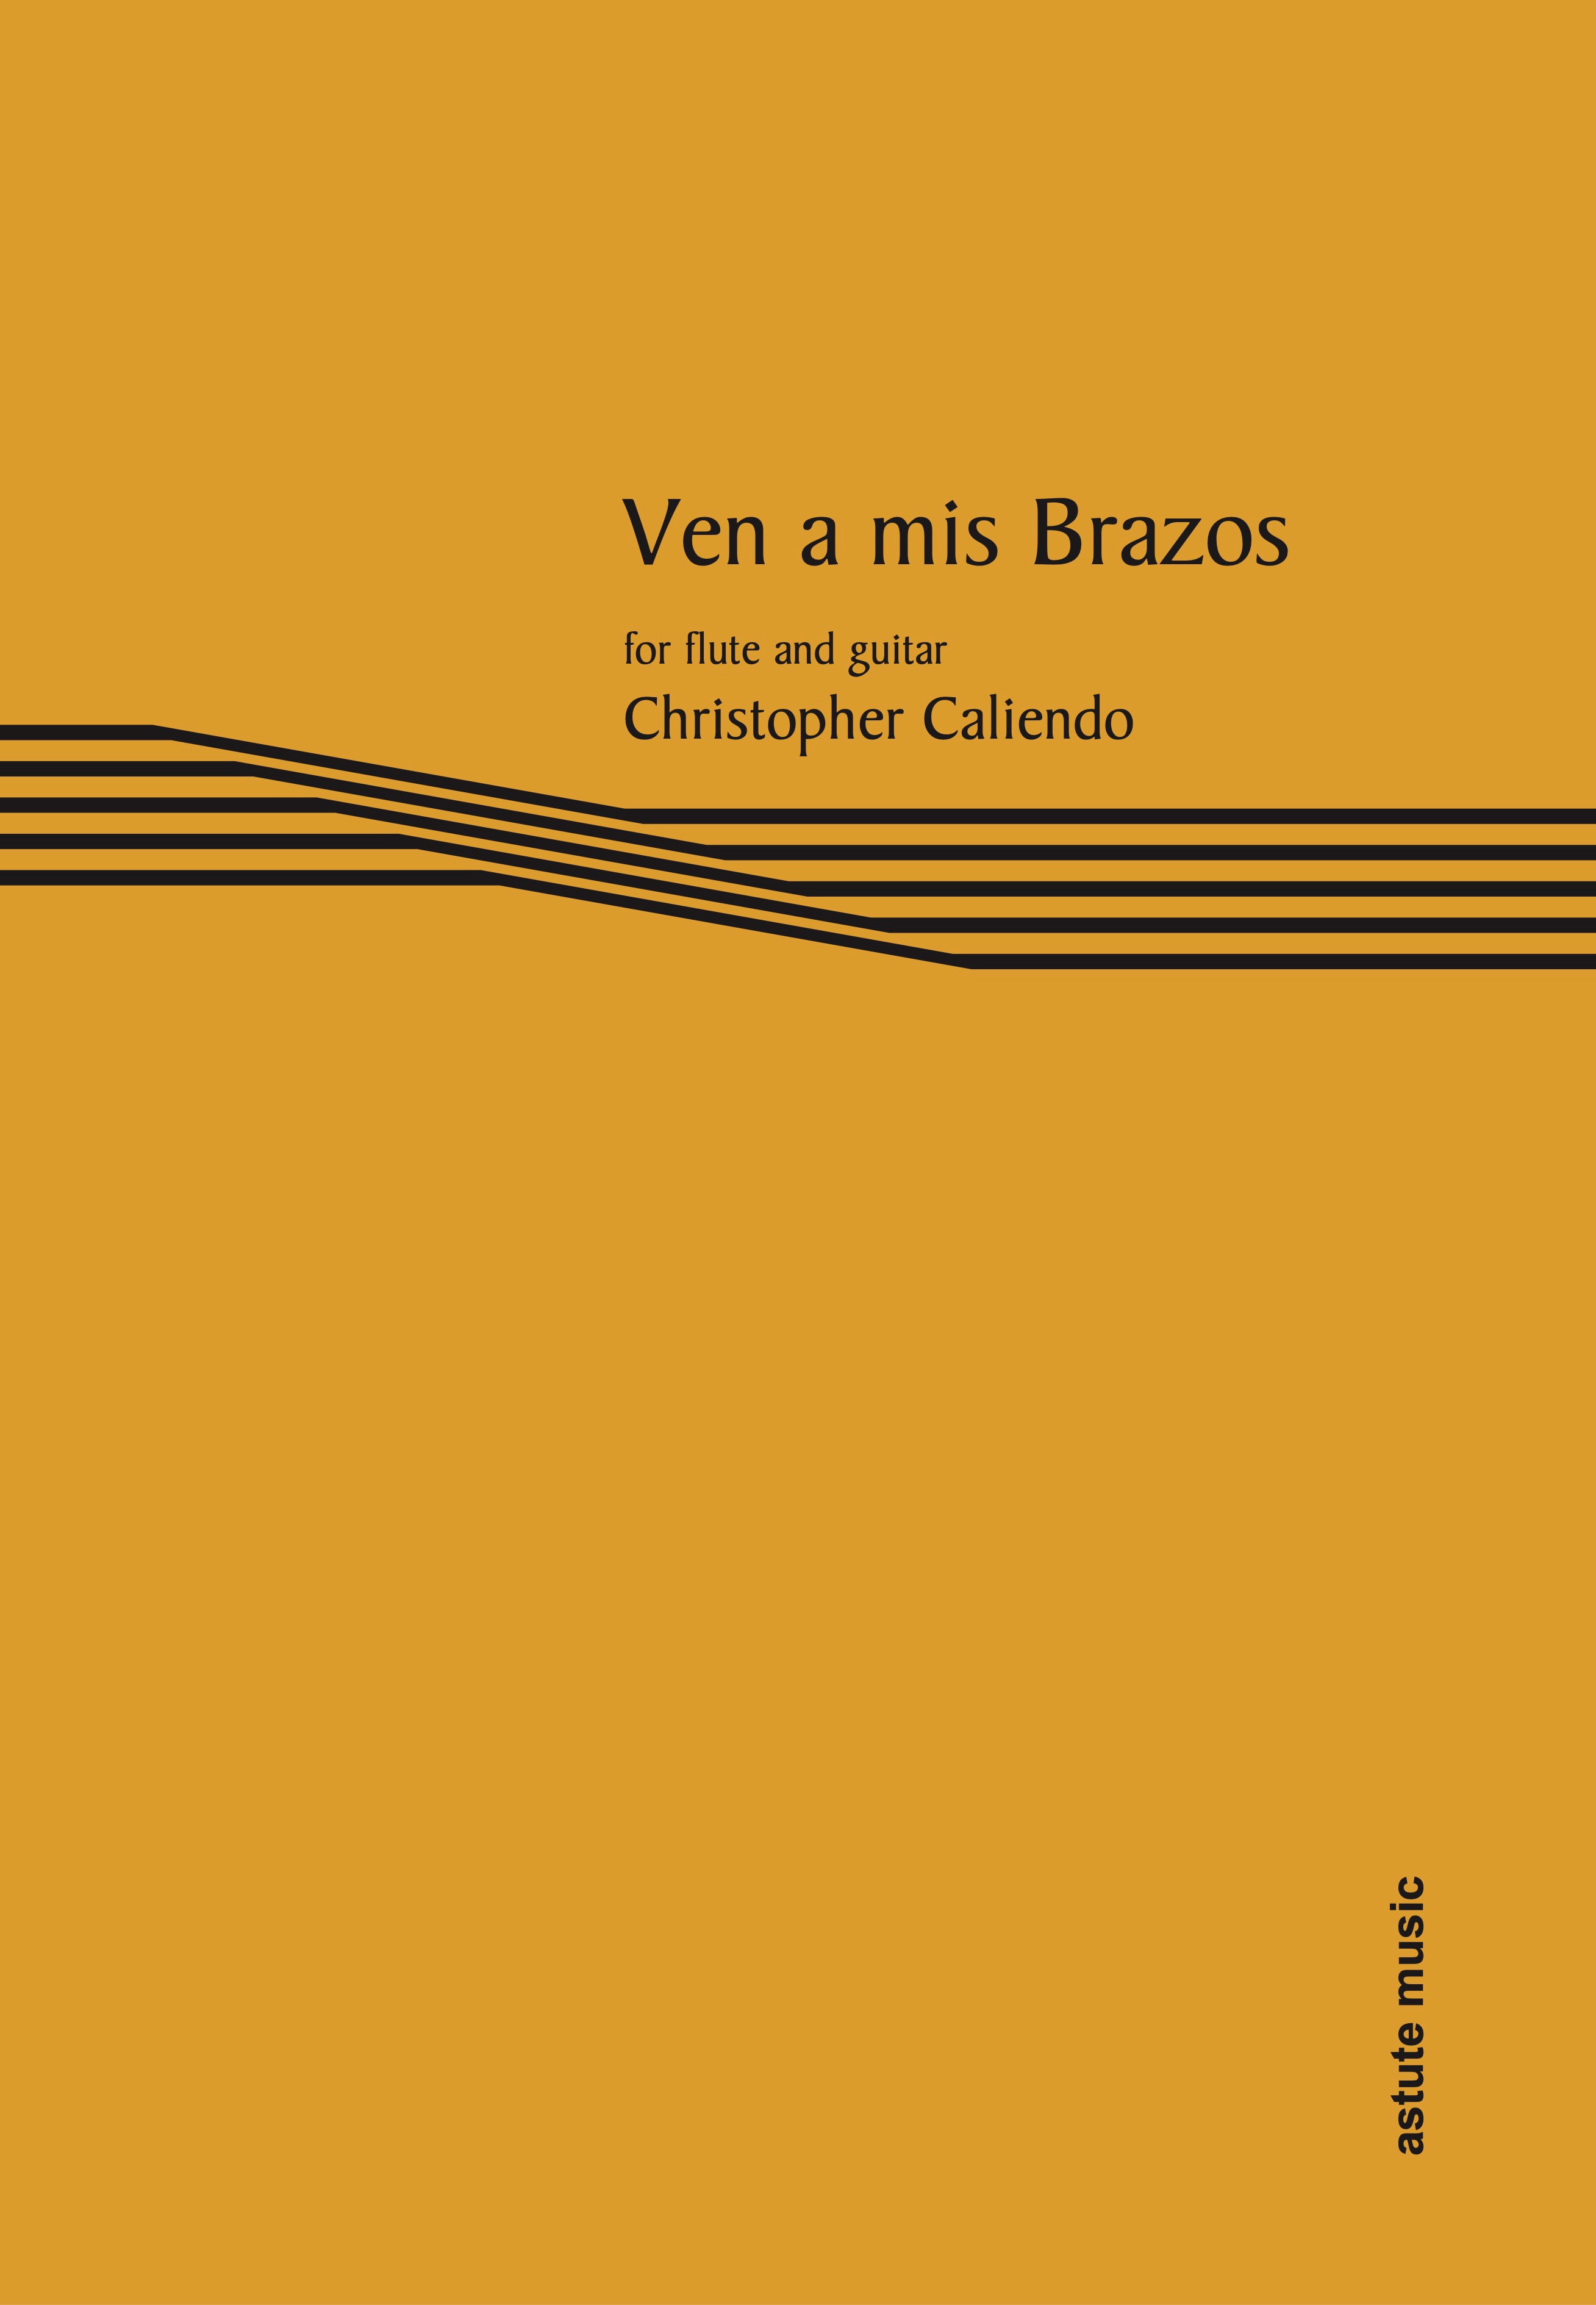 Caliendo Ven A Mis Brazos Flute & Guitar Sheet Music Songbook